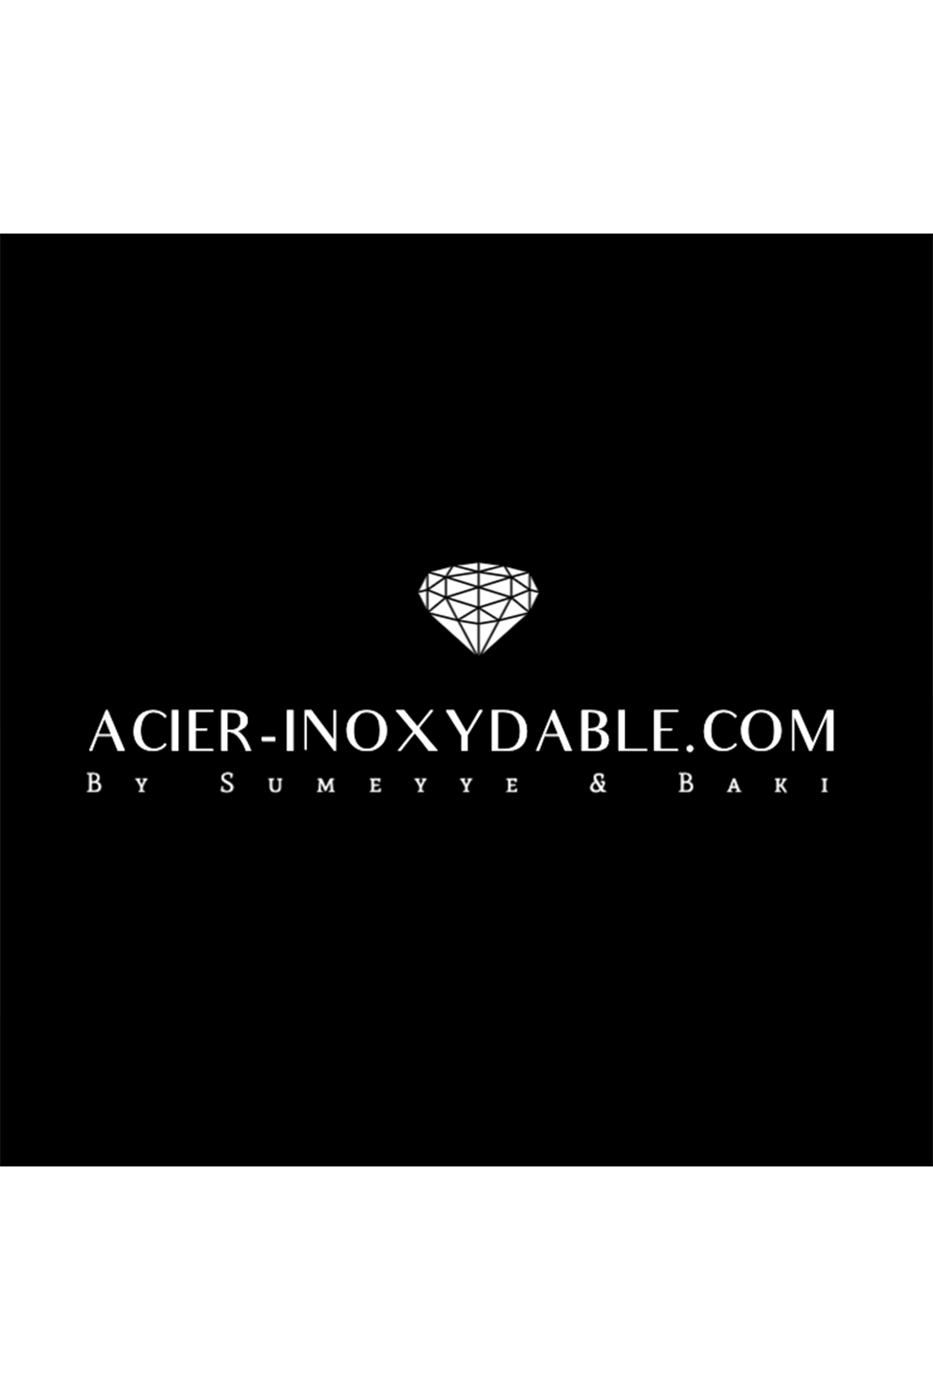 acier-inoxydable.com